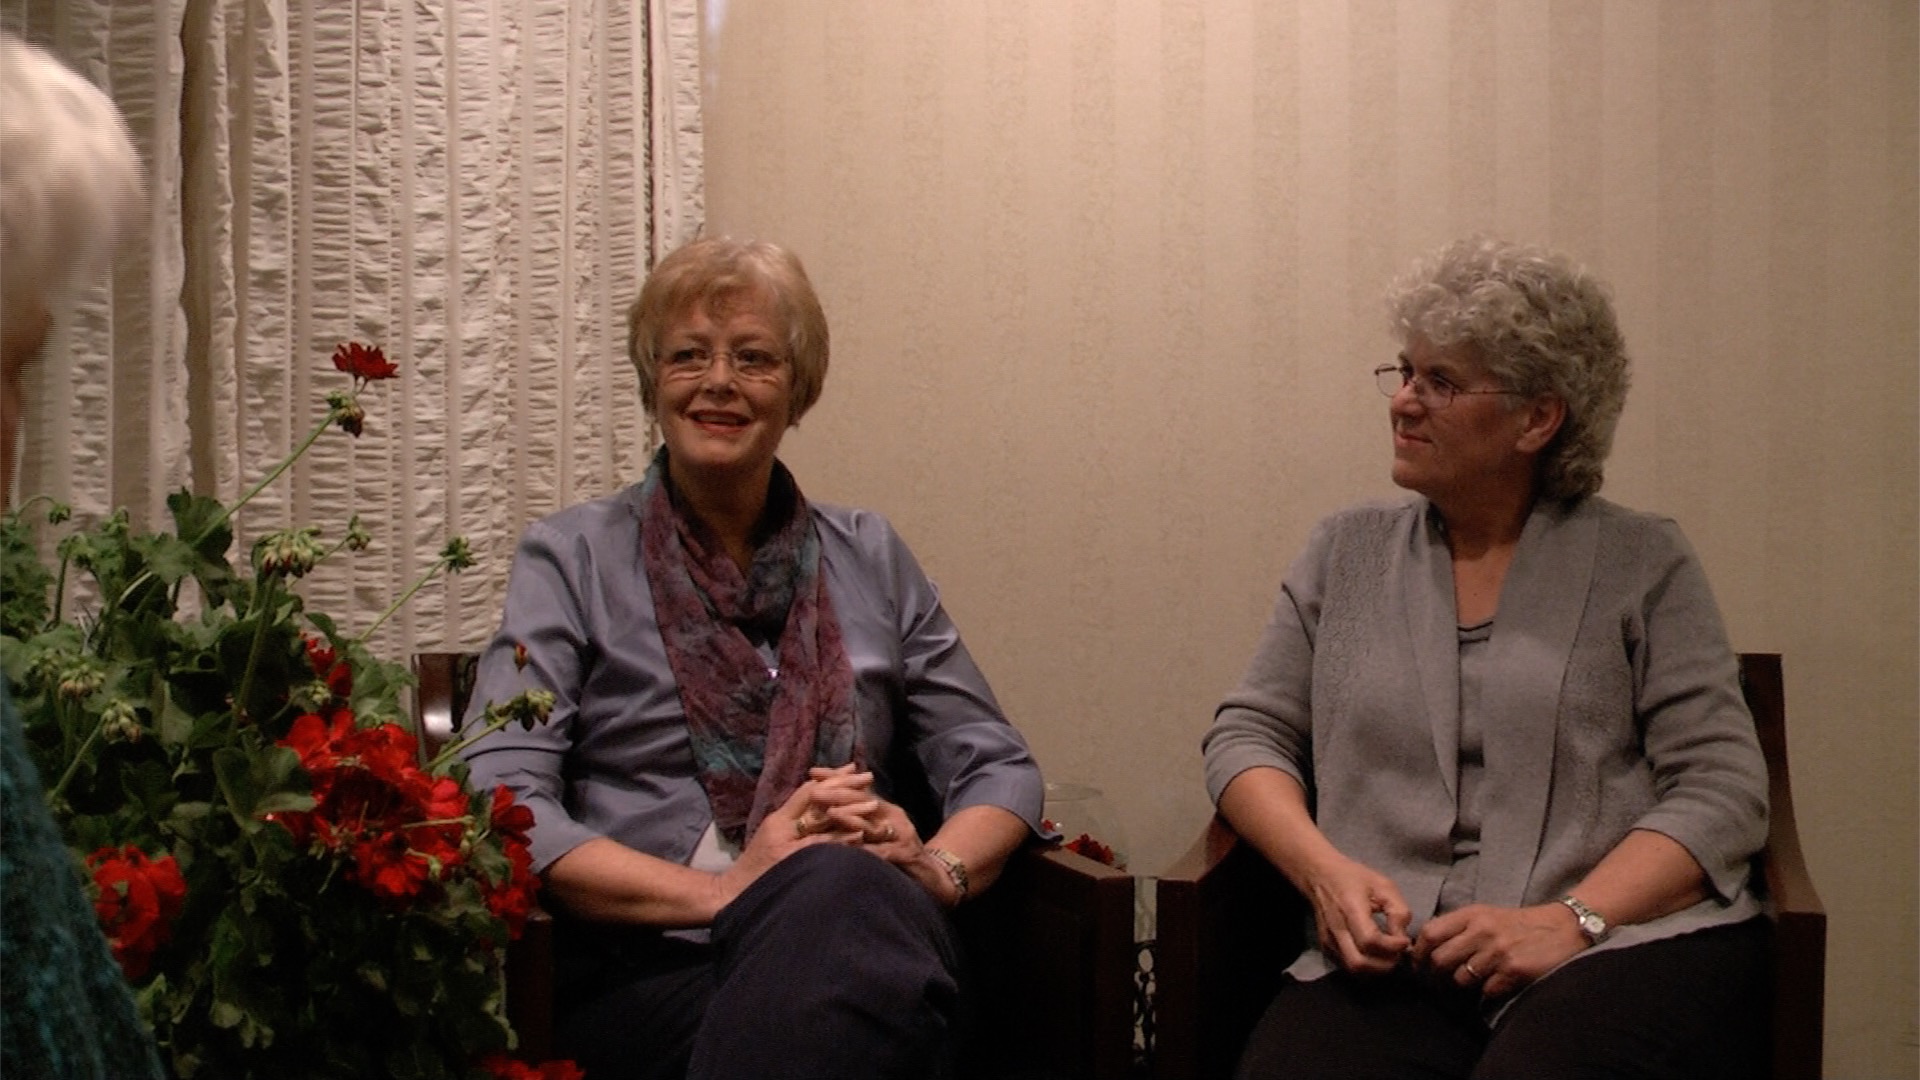 Linda Wagner and Paula Gubrud -Howe sit down with Dr. Benner